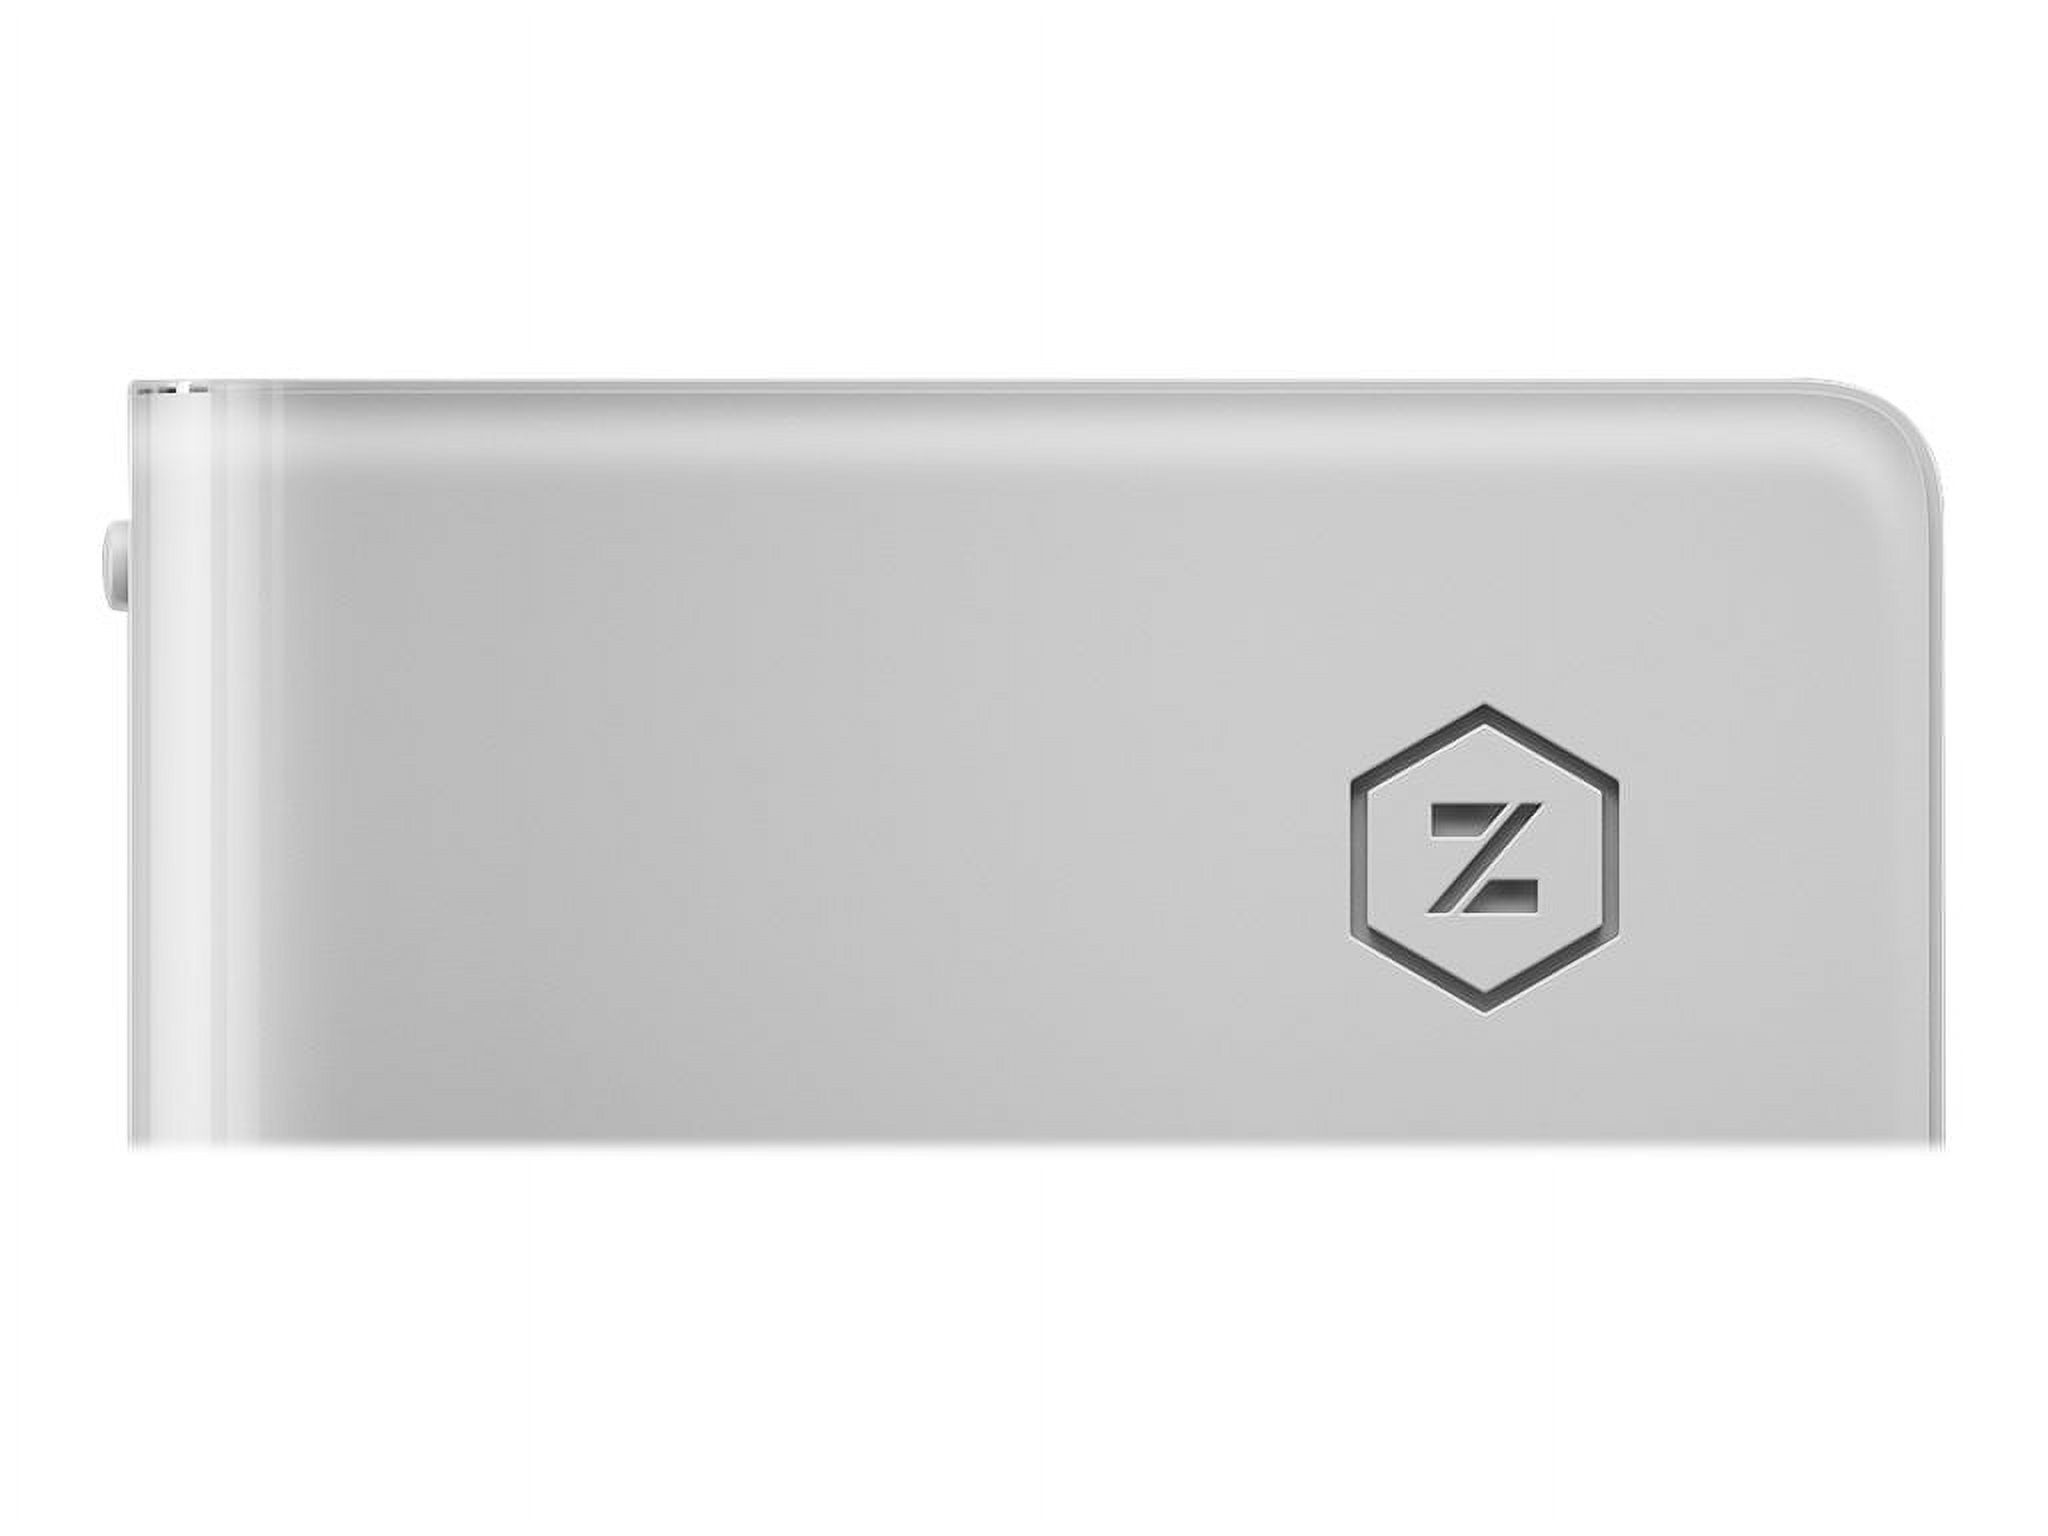 Zuli - Smart plug - wireless - Bluetooth - image 3 of 4